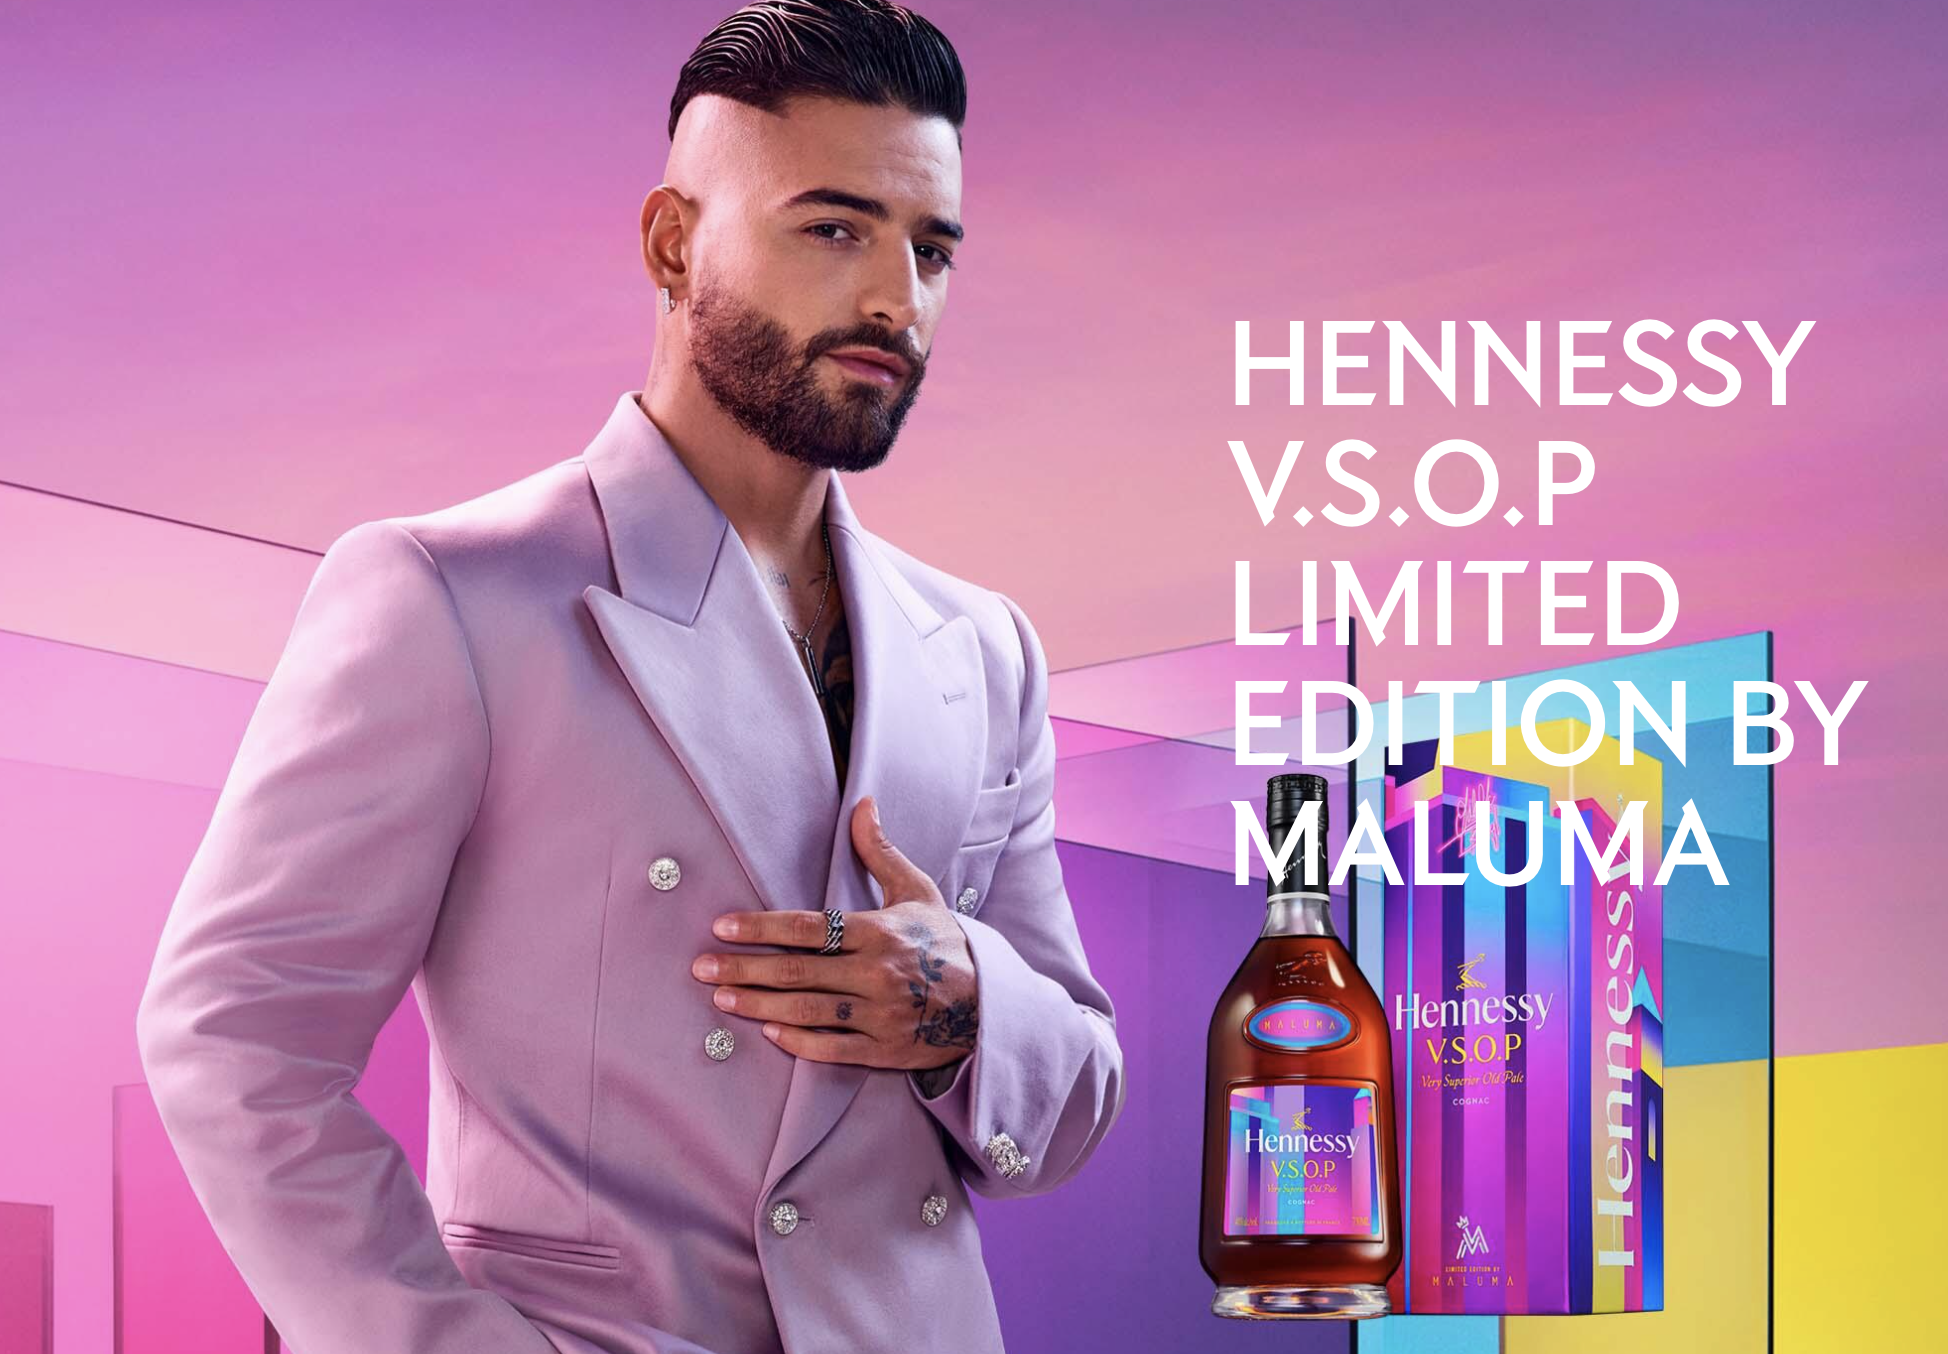 Maluma’s Limited Edition Hennessy